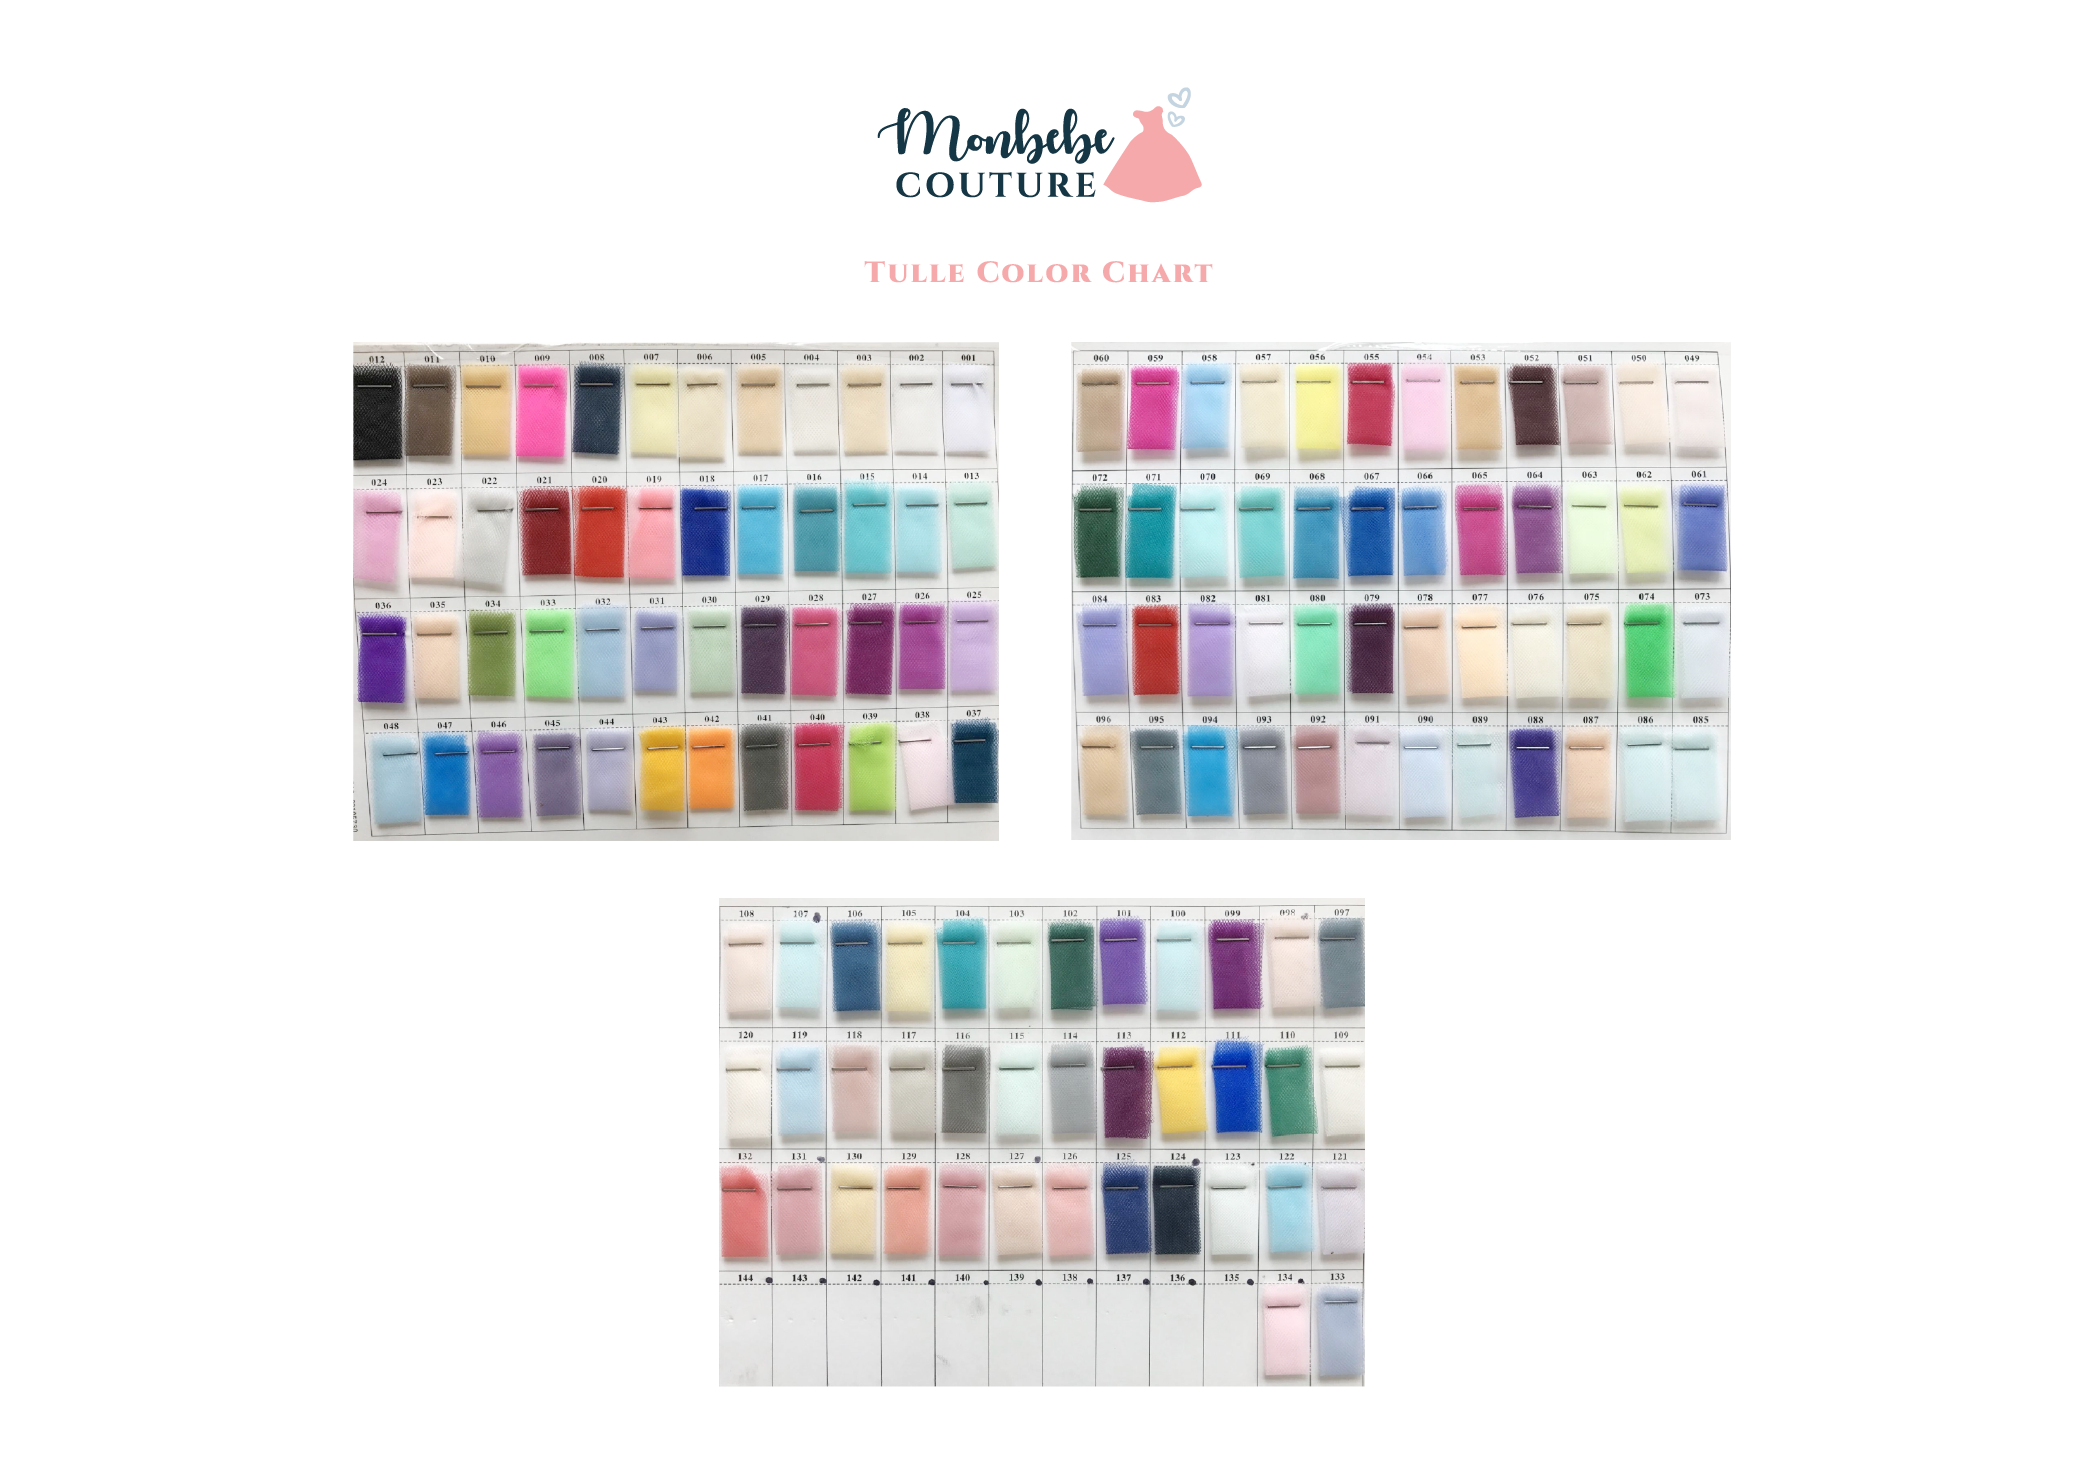 Color chart Monbebe Couture Houston bridal store